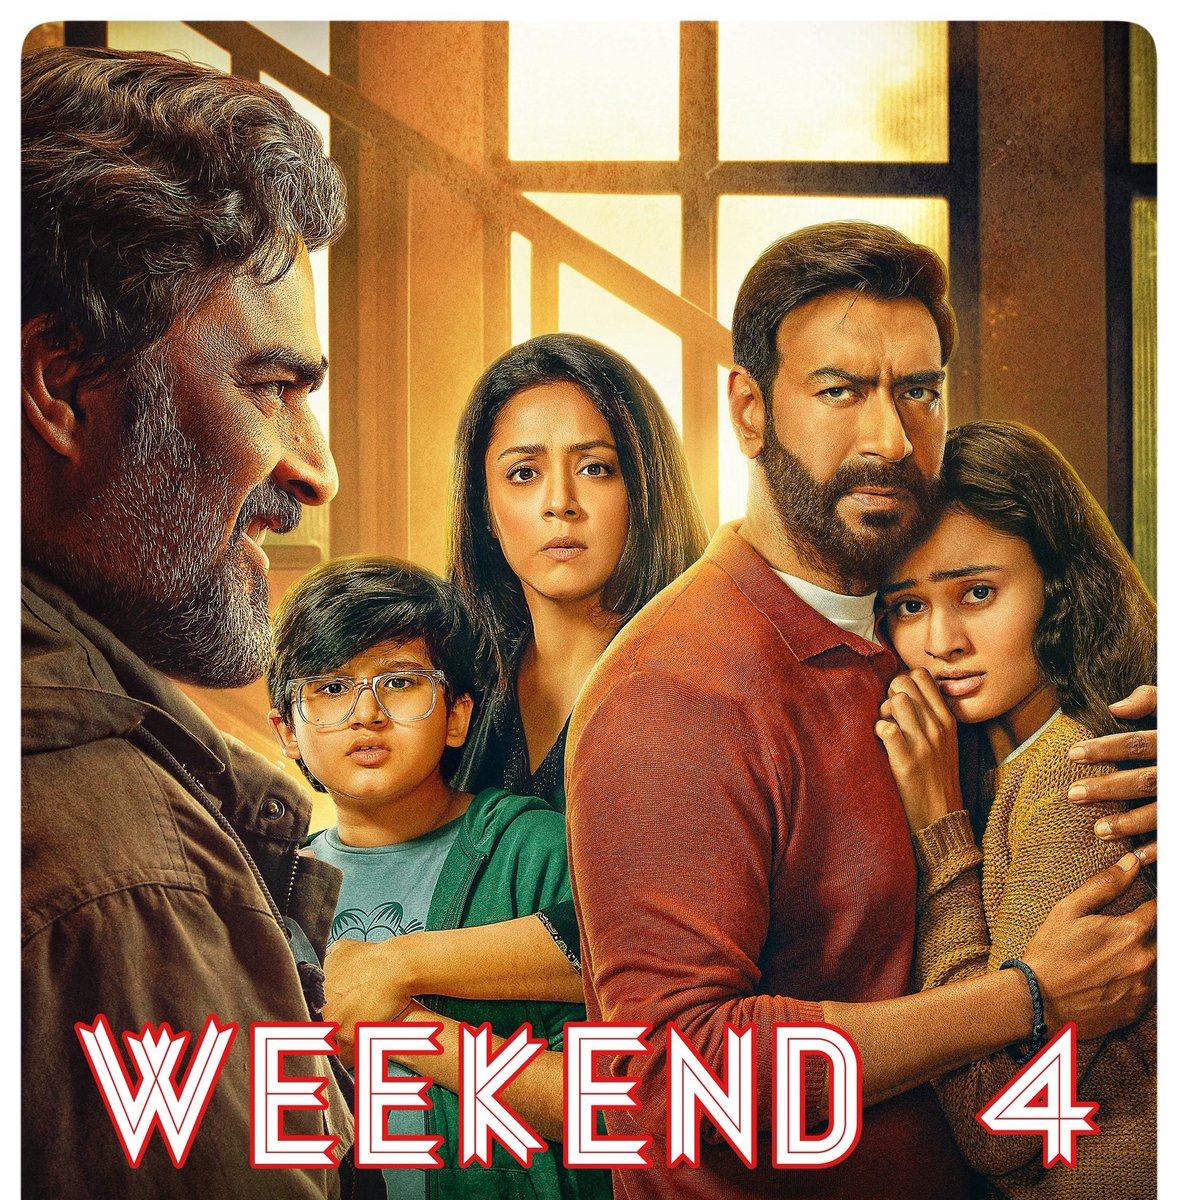 #Shaitaan biz at a glance… ⭐️ Week 1: ₹ 81.60 cr ⭐️ Week 2: ₹ 36.08 cr ⭐️ Week 3: ₹ 20.04 cr ⭐️ Weekend 4: ₹ 4.34 cr ⭐️ Total: ₹ 142.06 cr #India biz. #BoxOffice